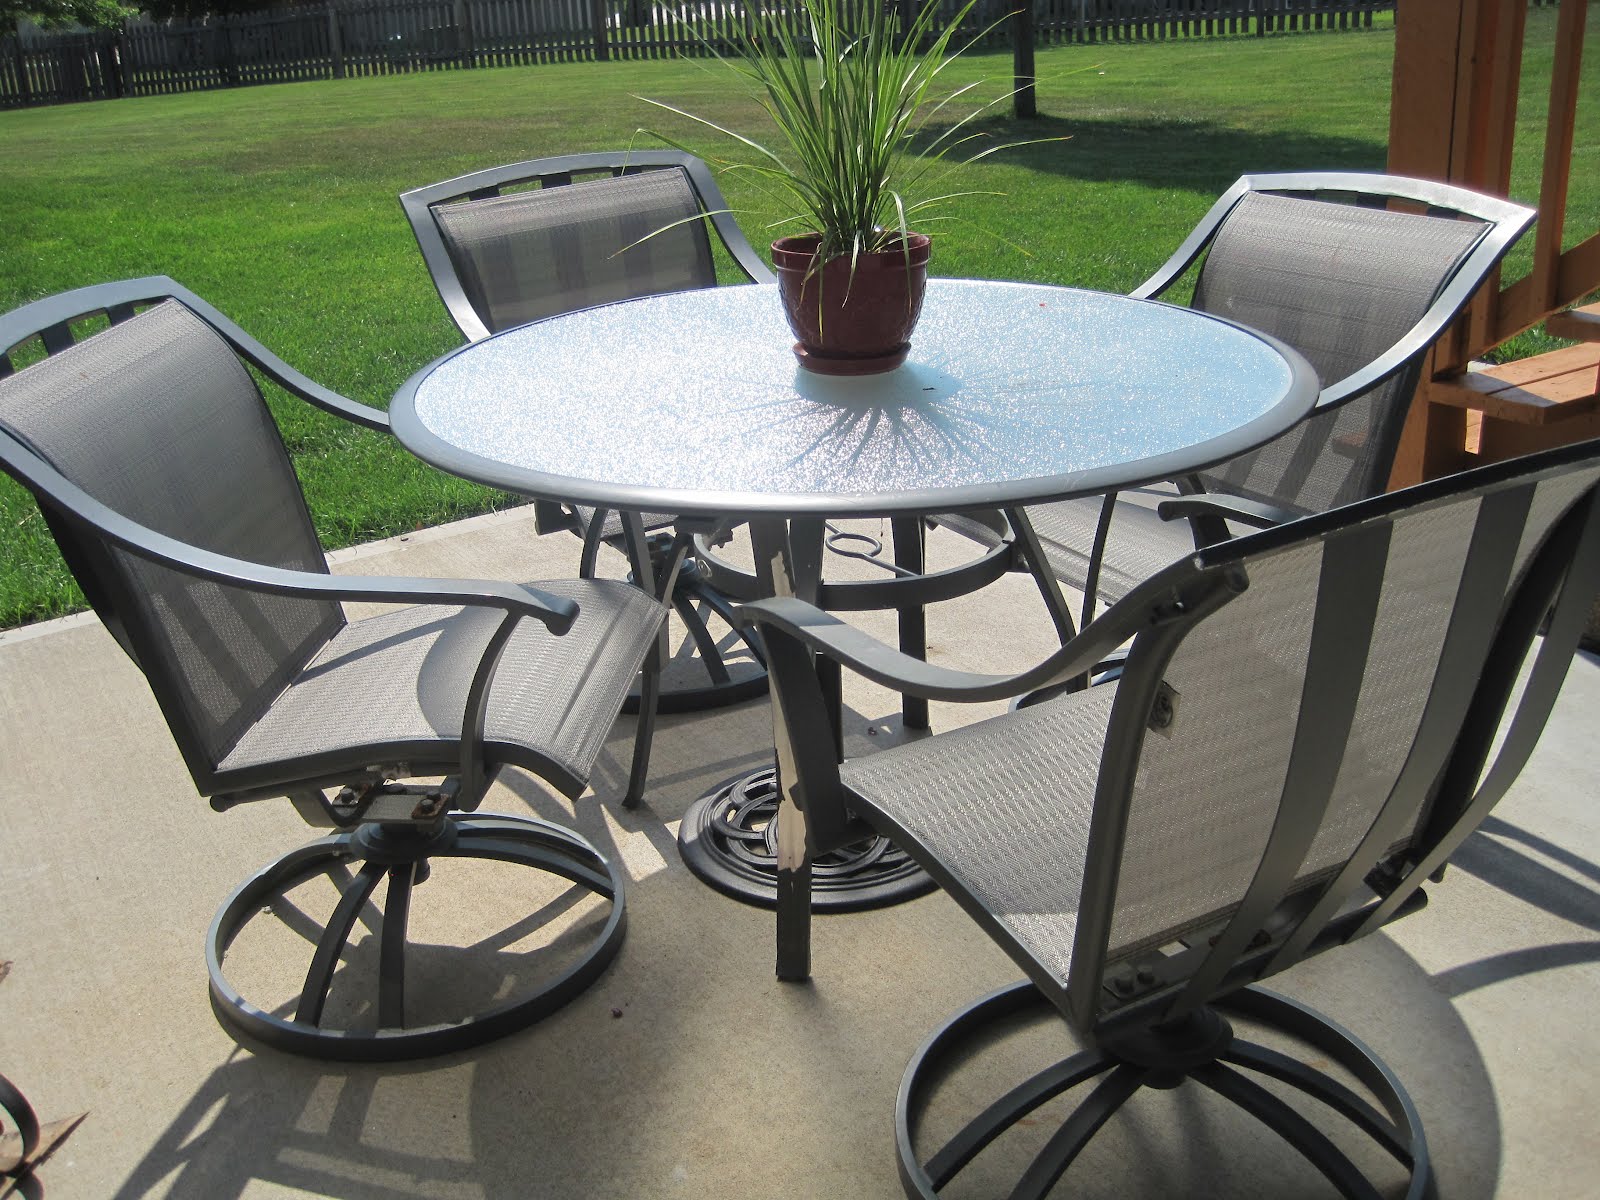 Guide purpose is to Hampton bay patio furniture - Patio Furniture For 